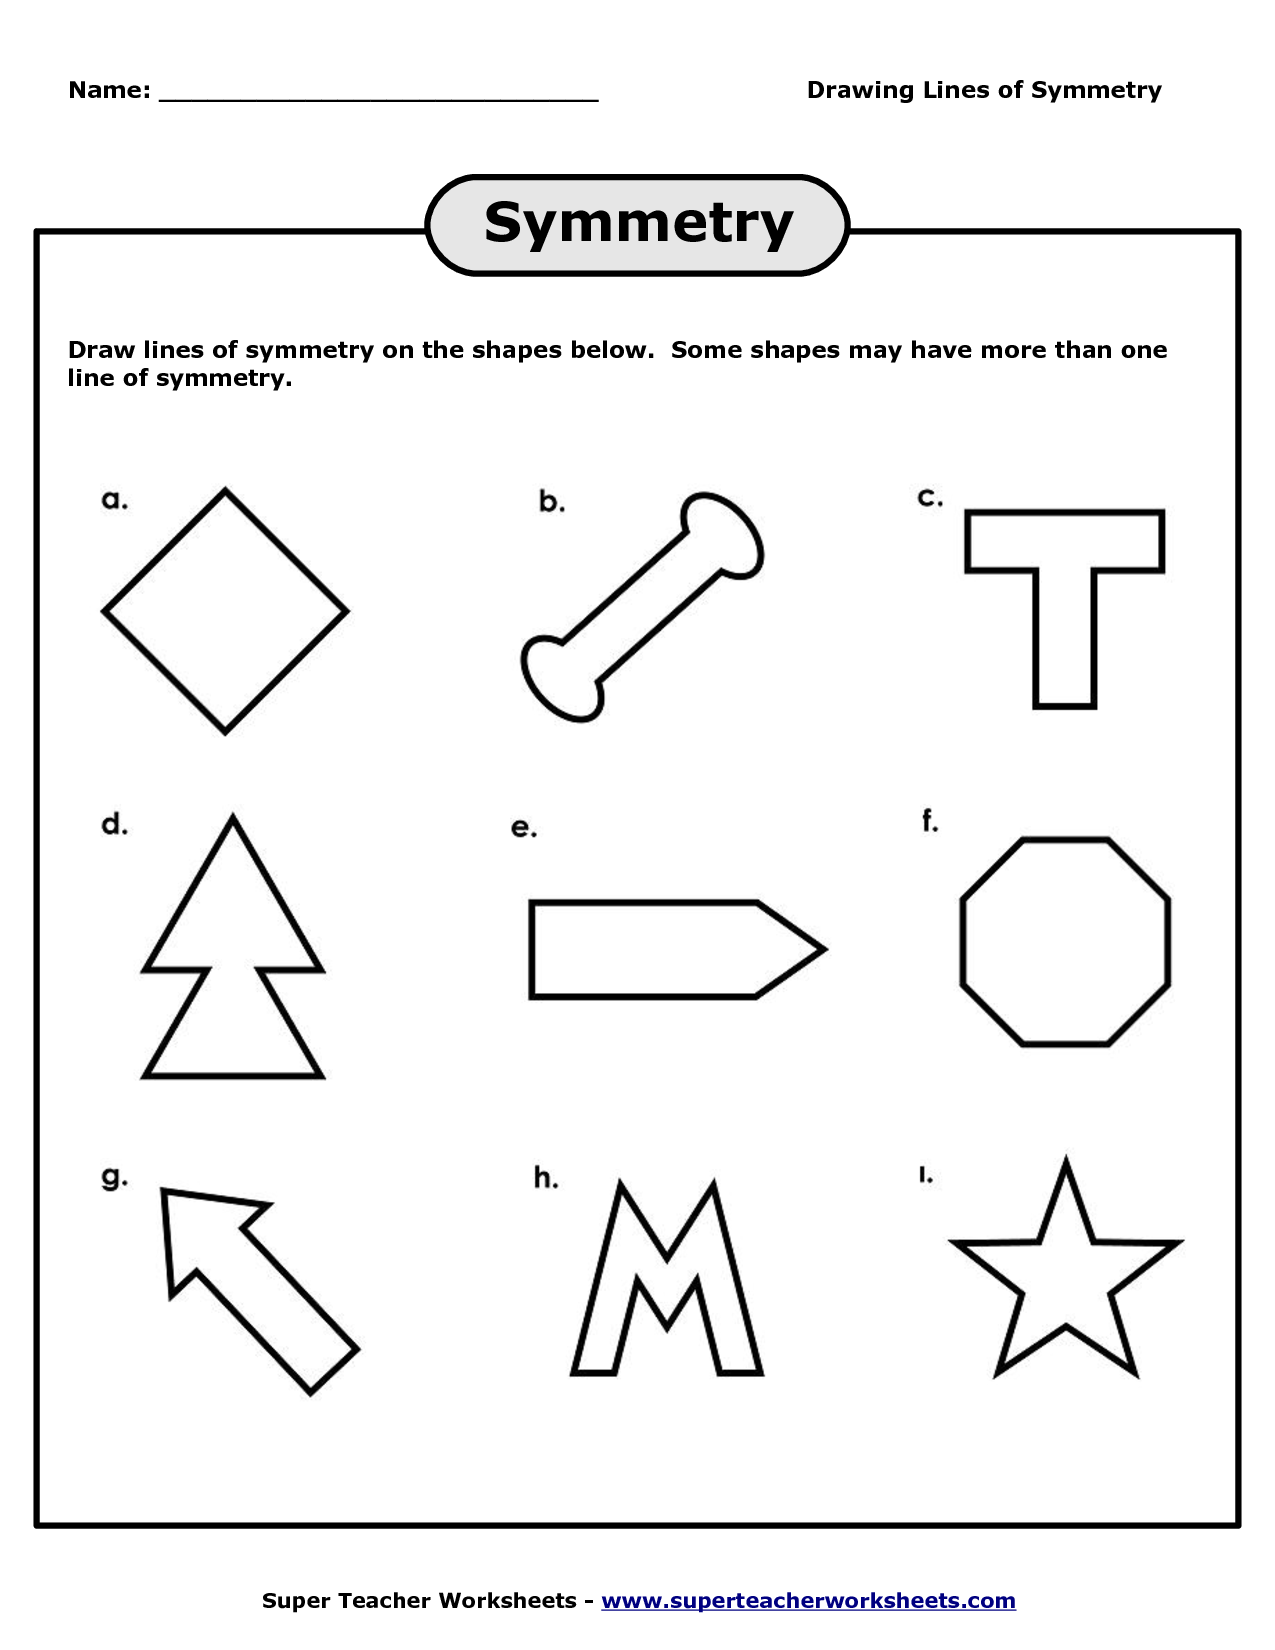 Draw Lines of Symmetry Worksheet Image